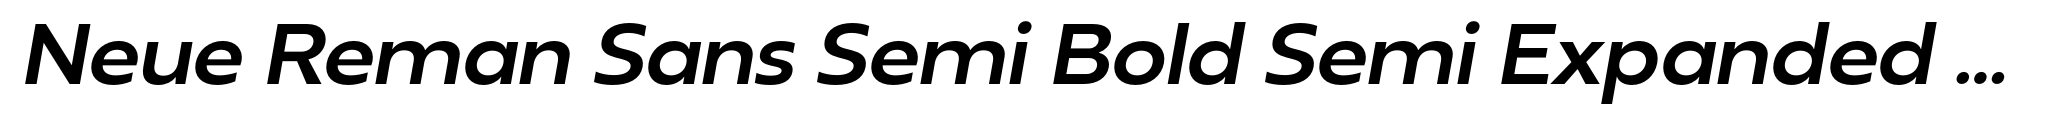 Neue Reman Sans Semi Bold Semi Expanded Italic image